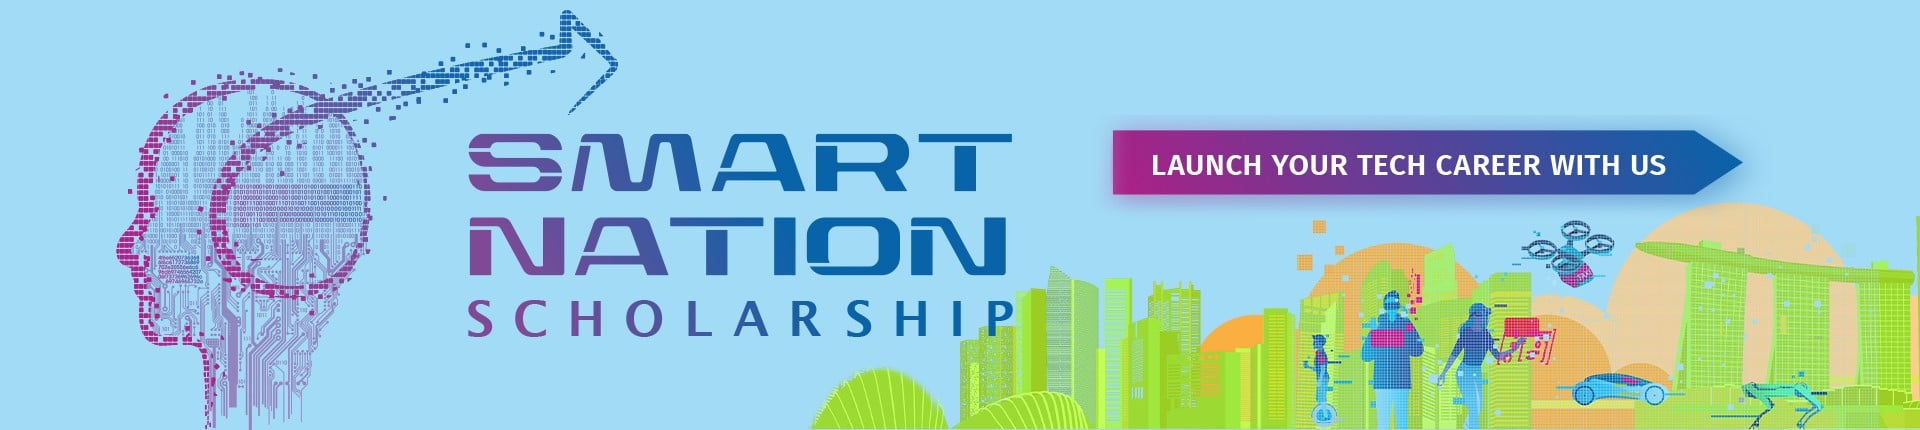 smart nation scholarship